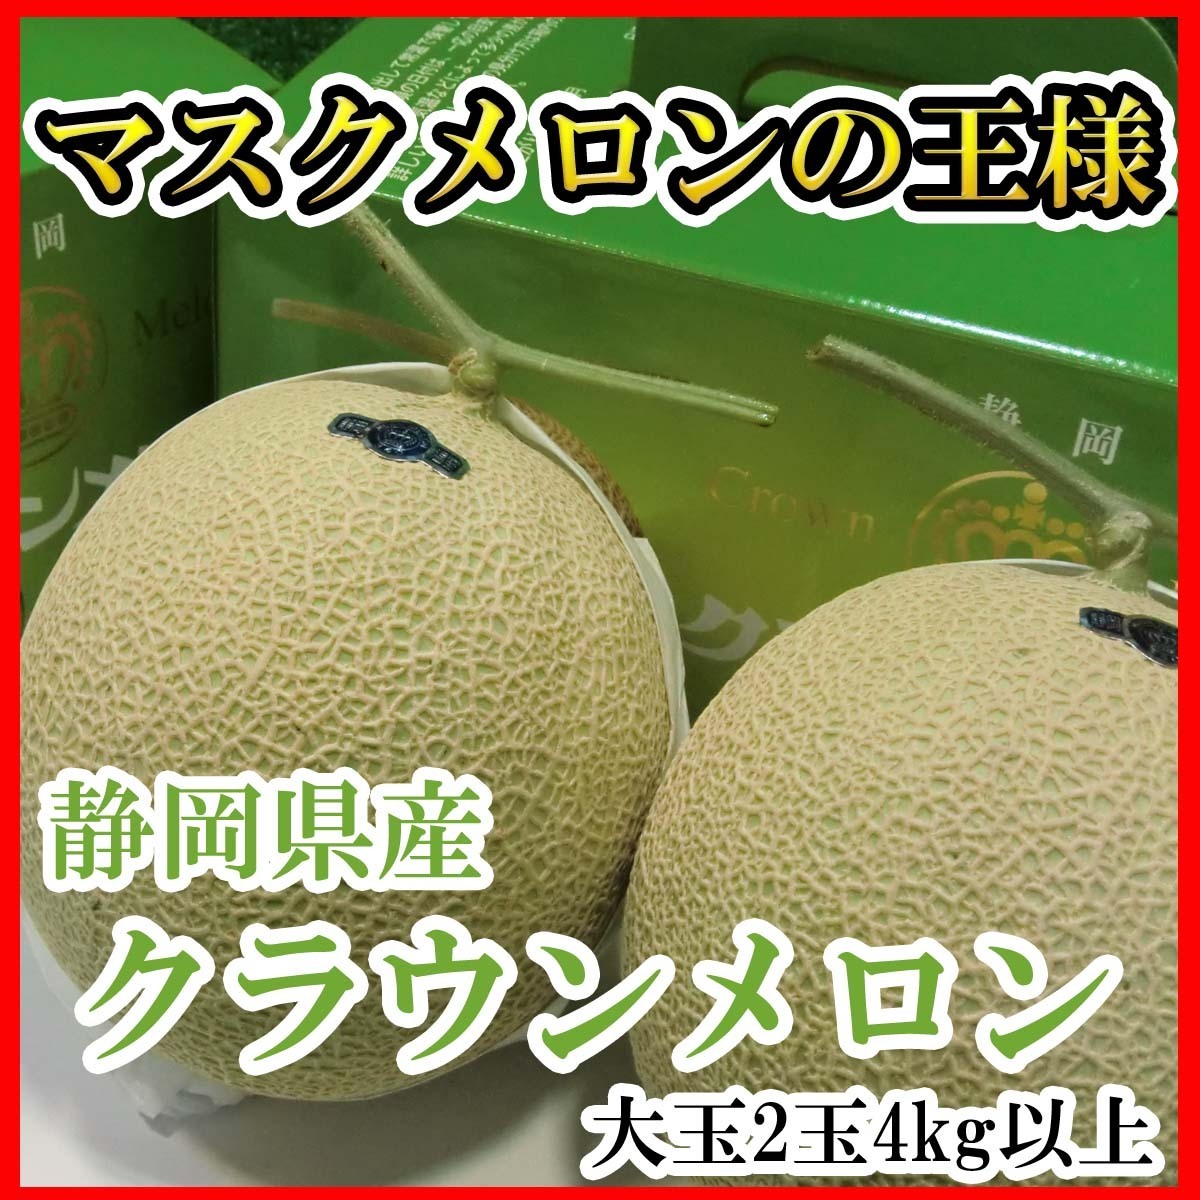 [Good] Shizuoka Crown melon large sphere 2 sphere 4~4.5kg vanity case entering reservation 